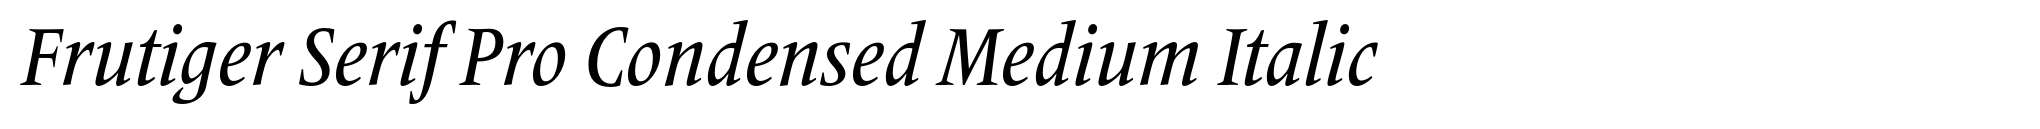 Frutiger Serif Pro Condensed Medium Italic image